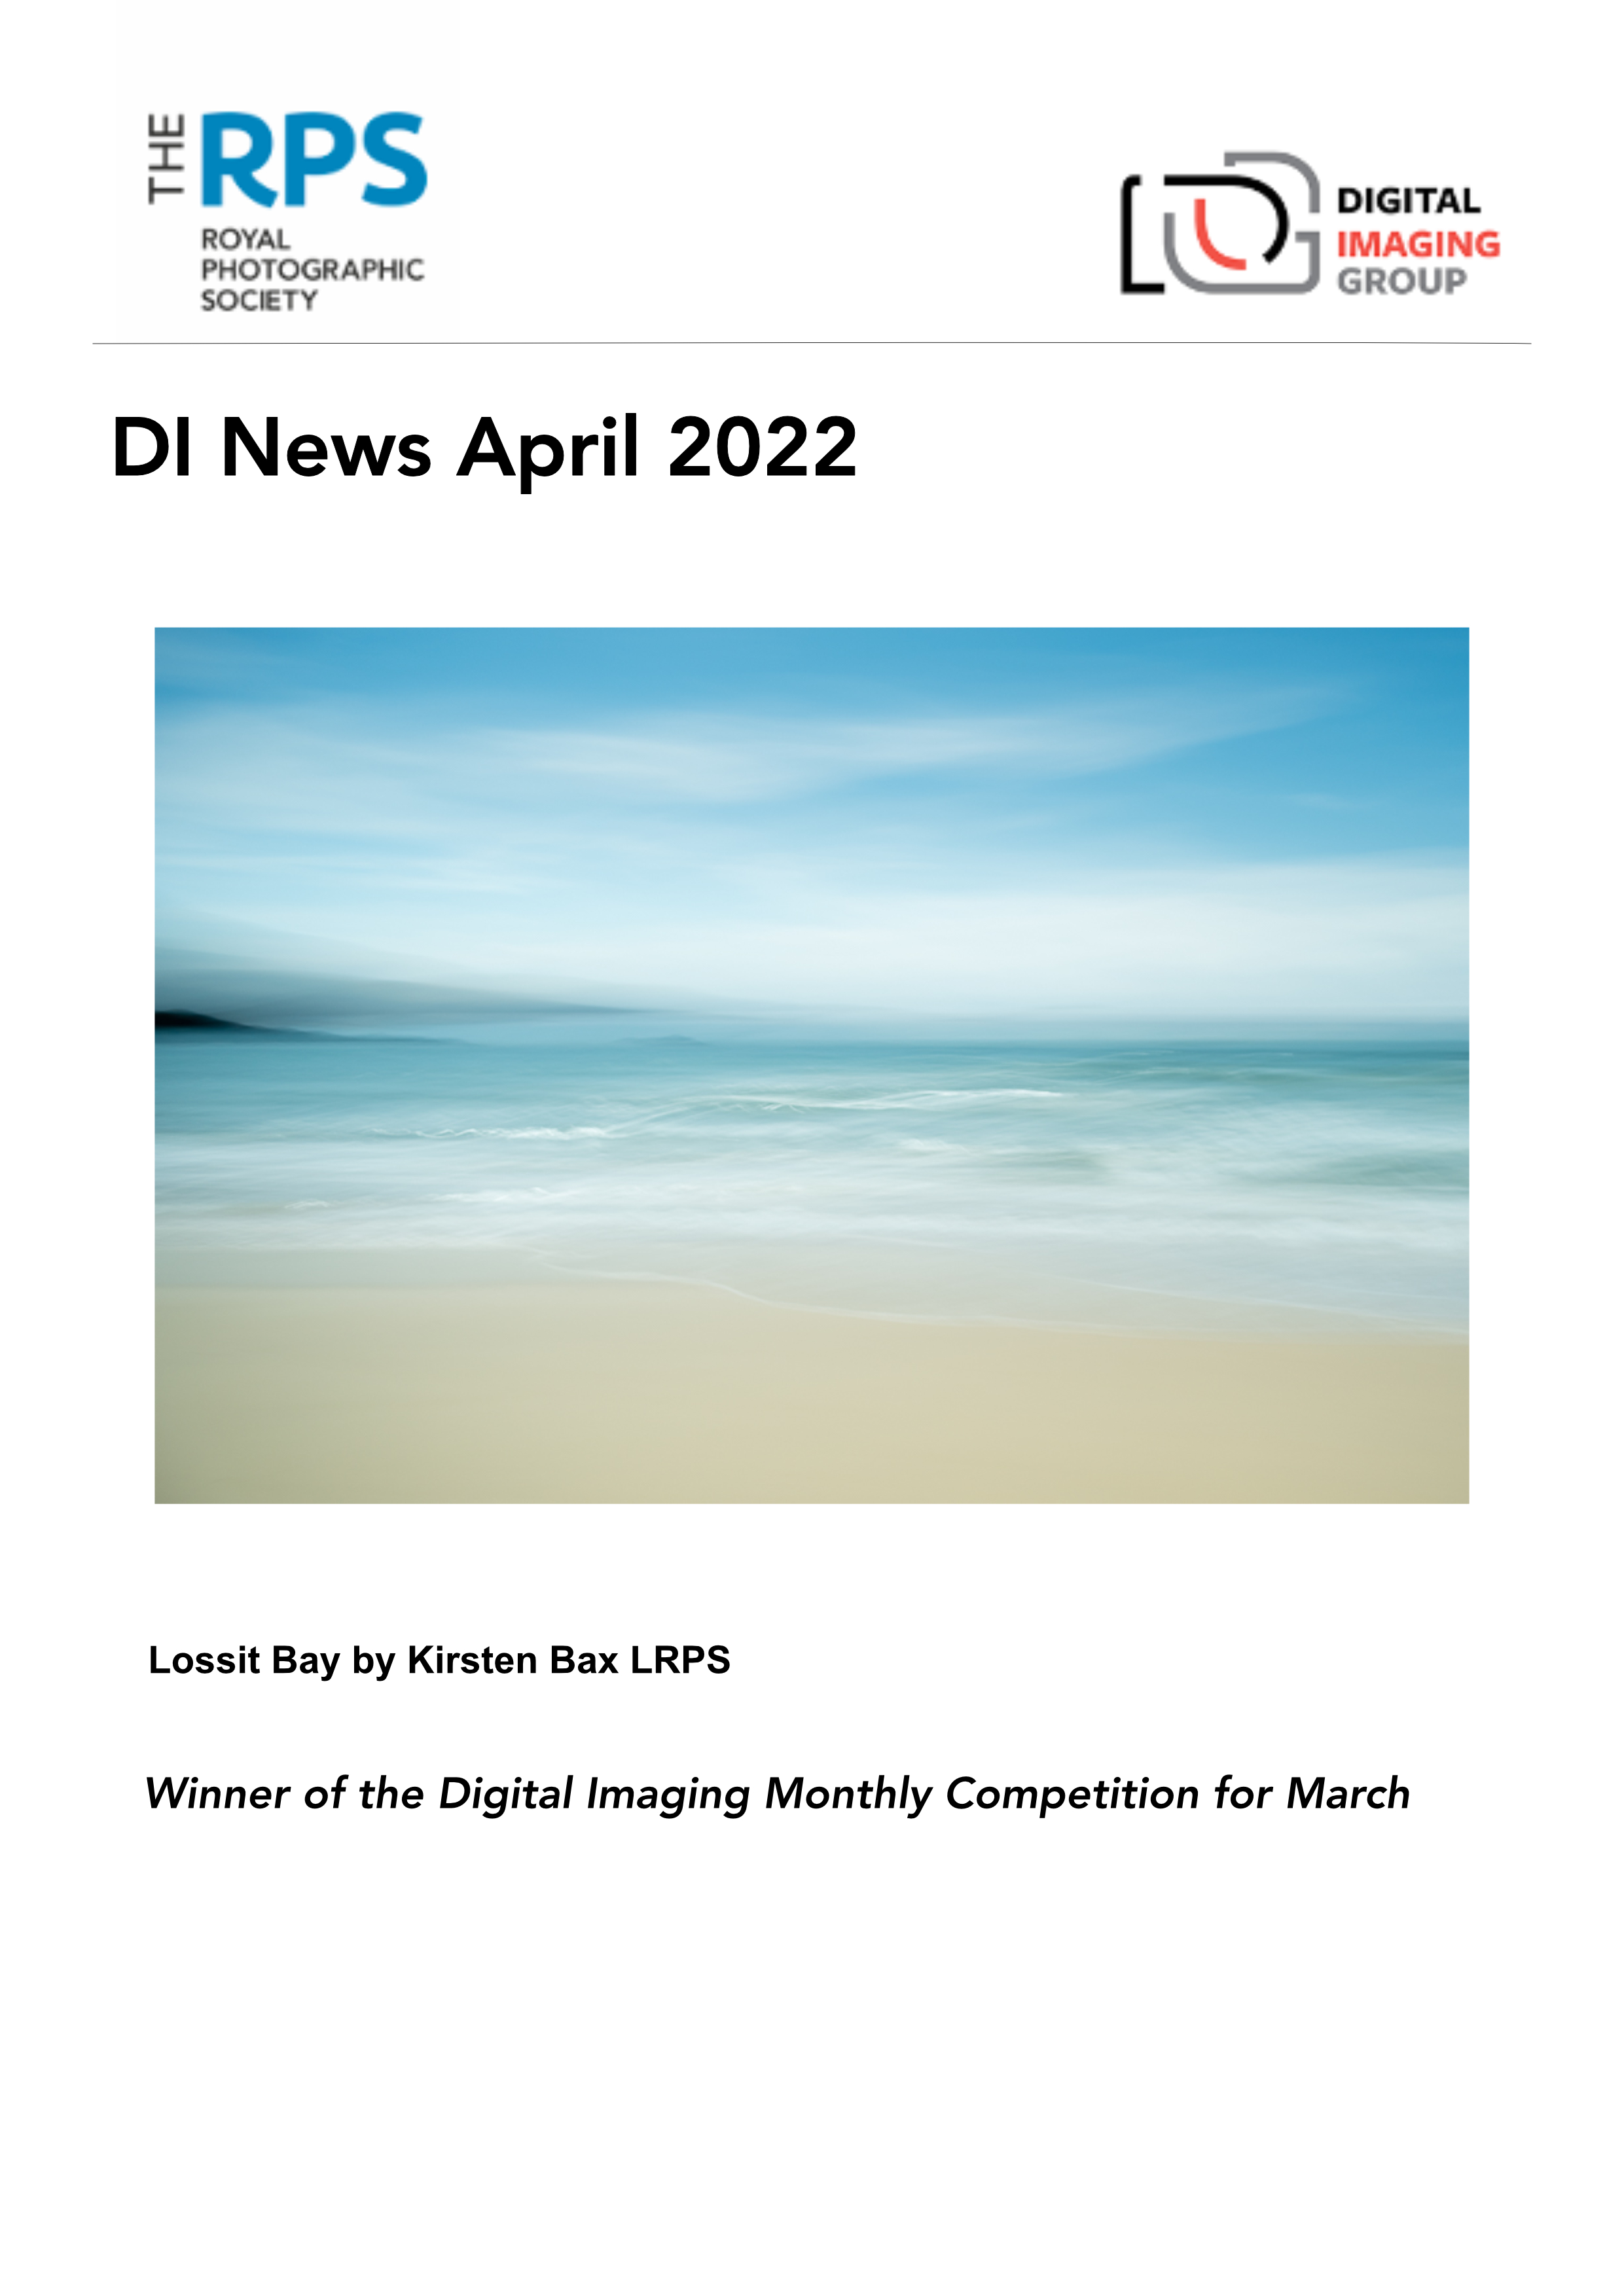 DI News April 1 2022